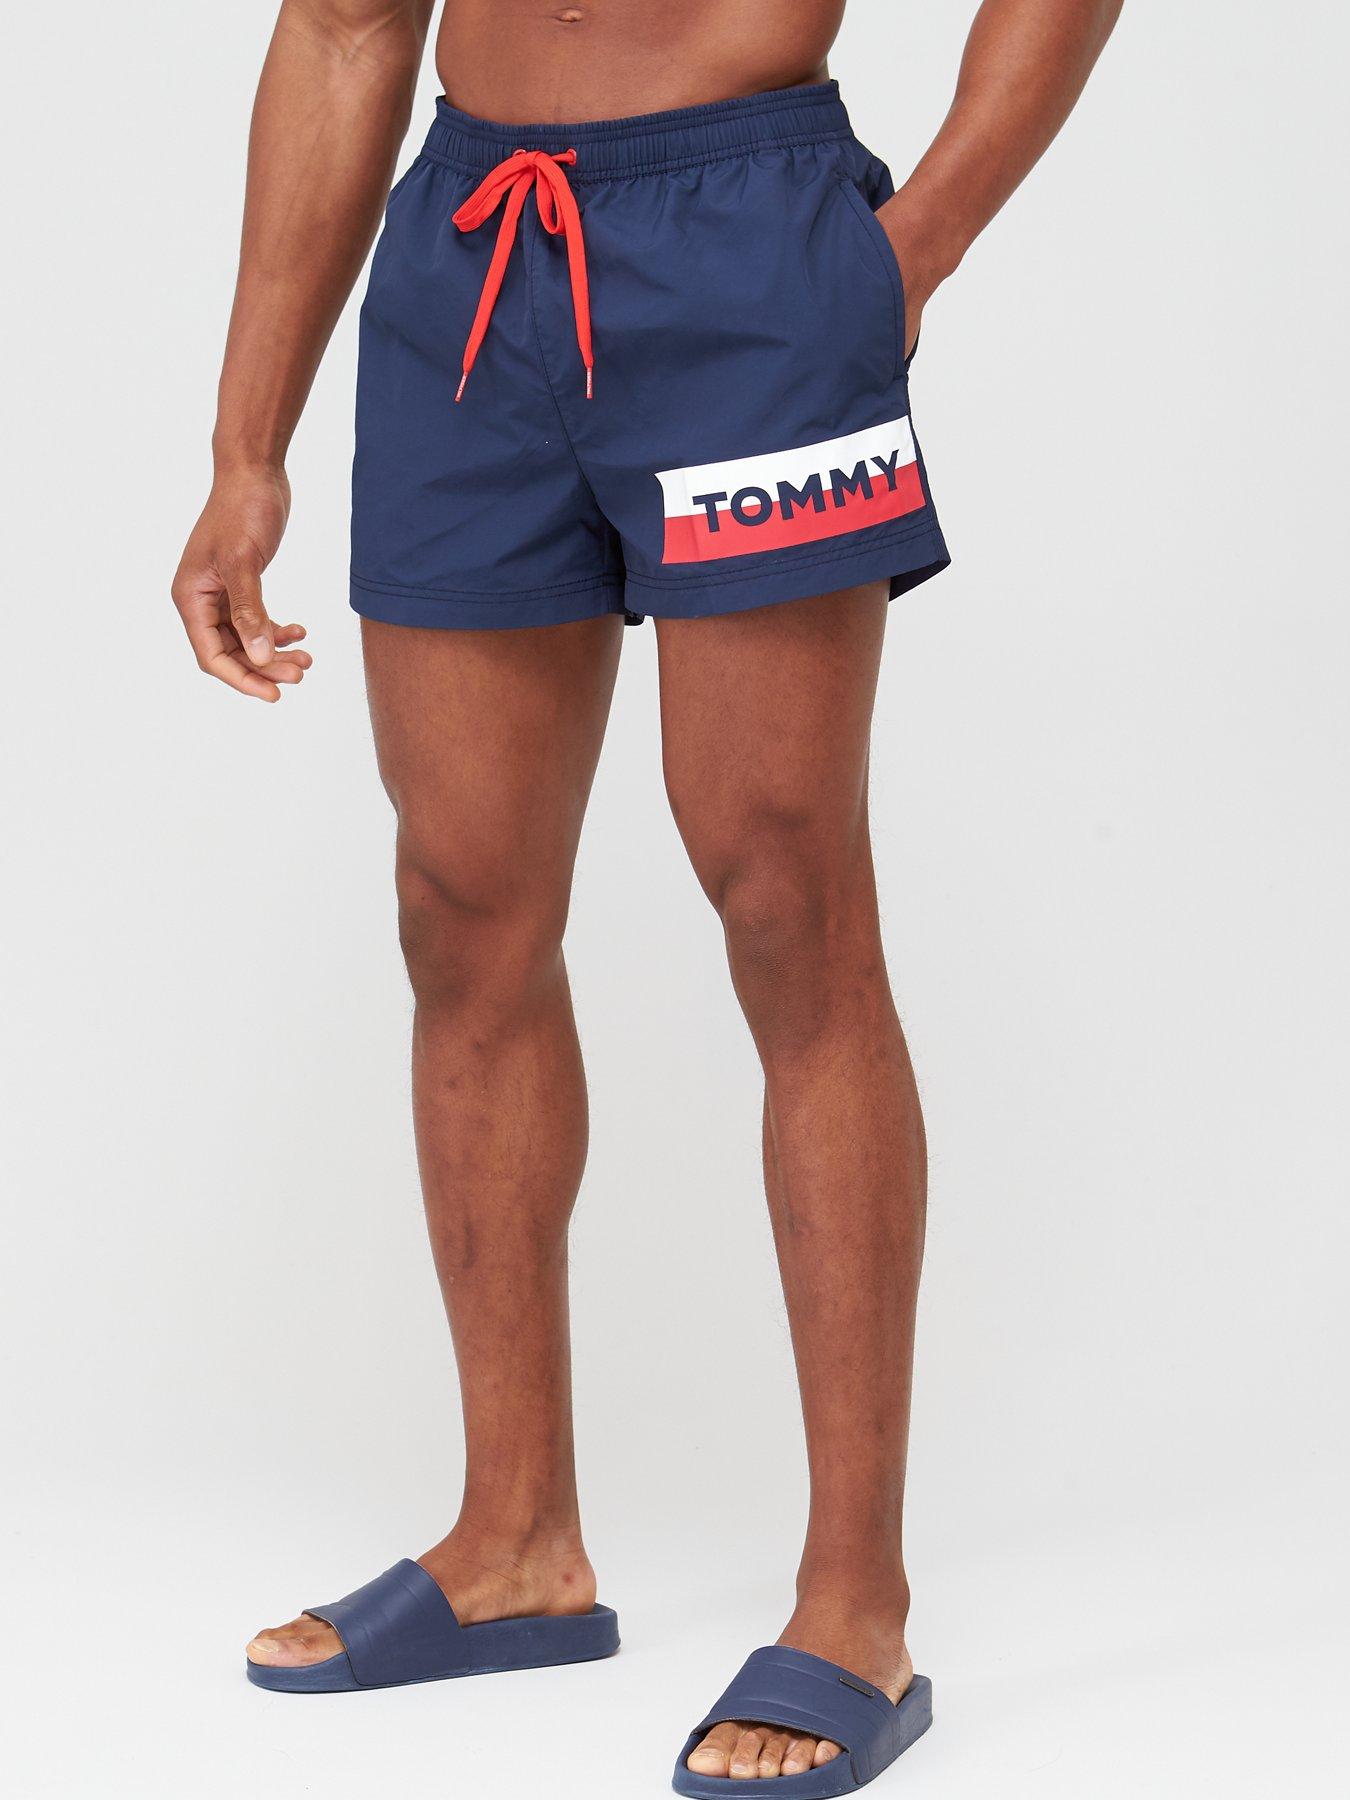 tommy hilfiger swim shorts uk